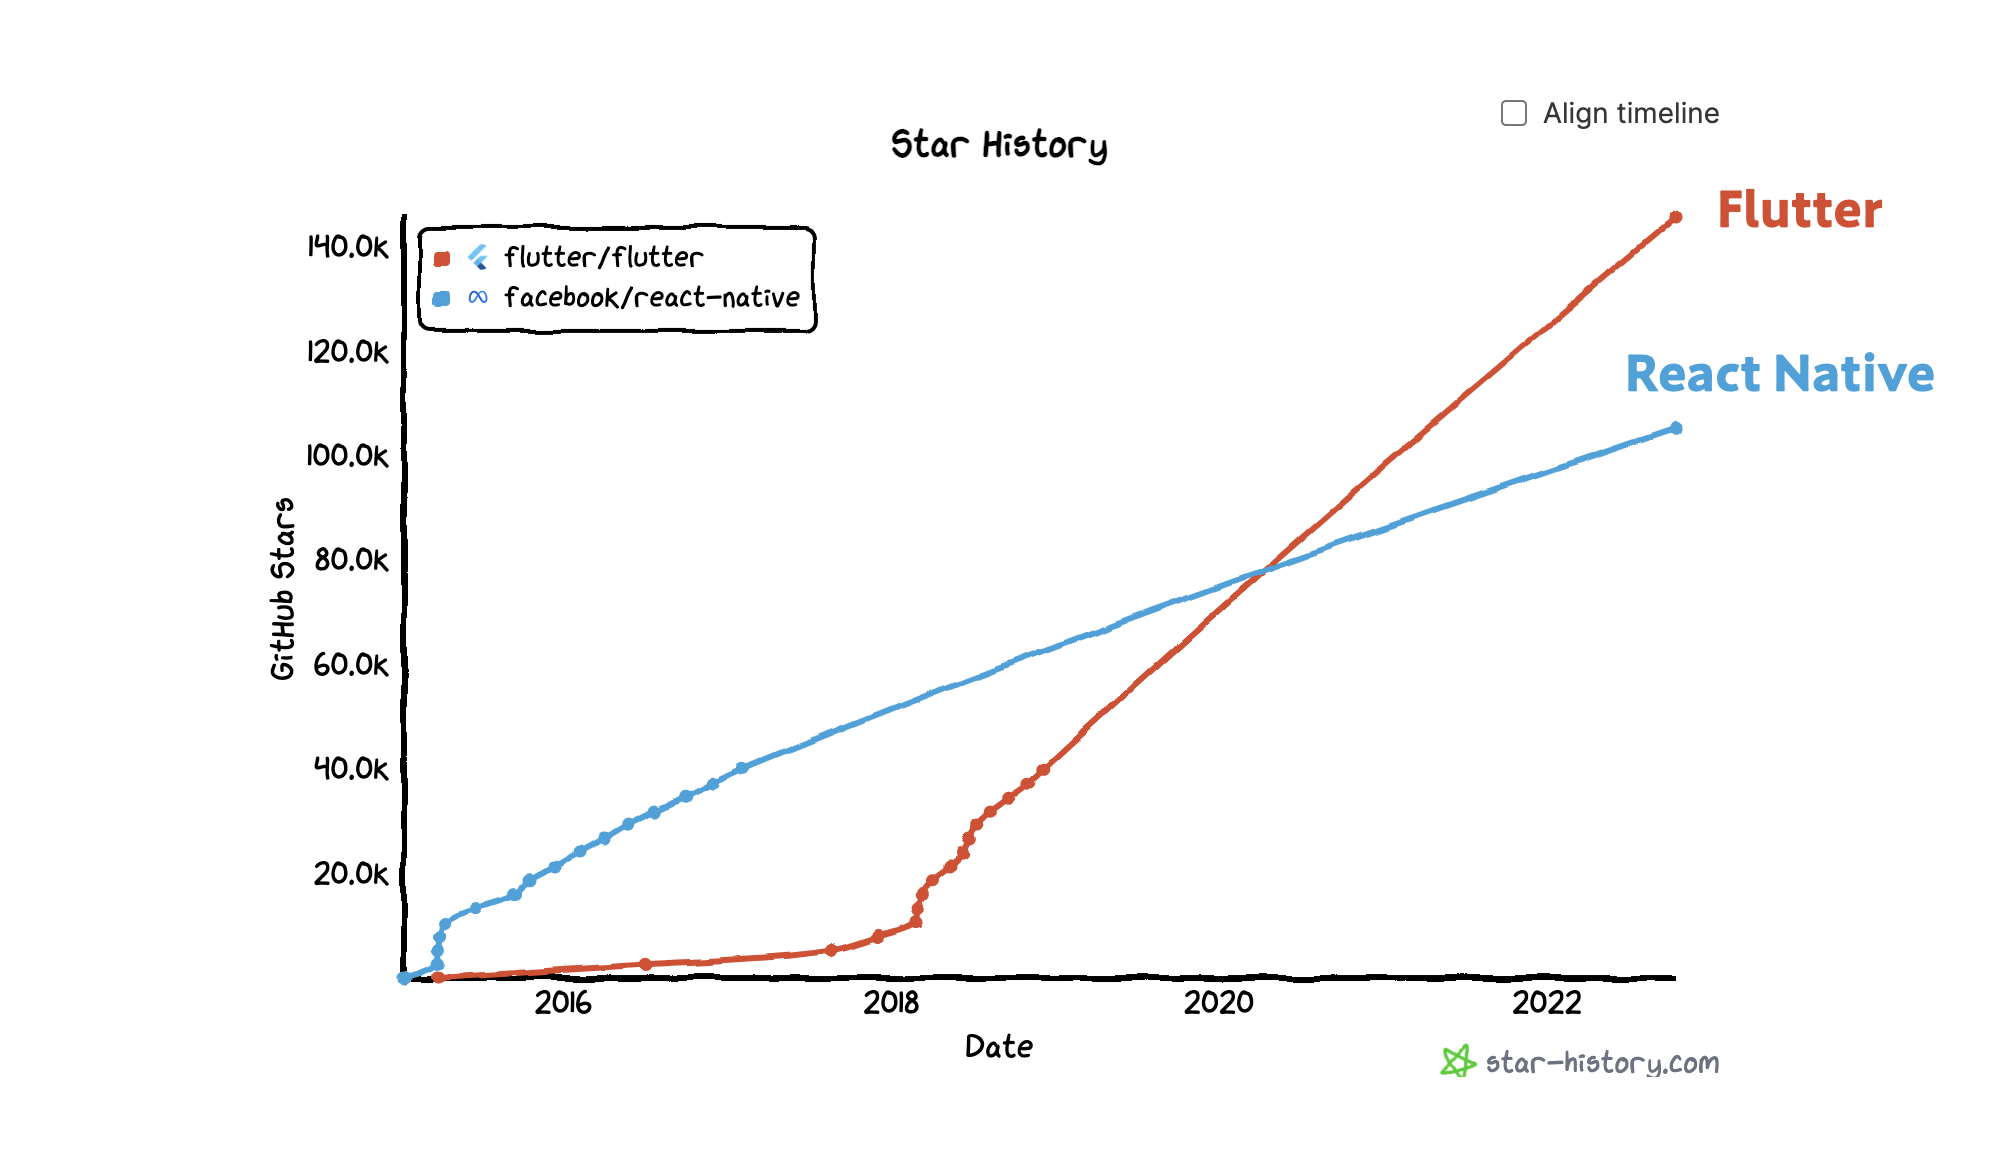 GitHubのスター数でFlutterとReact Nativeを比較したデータ